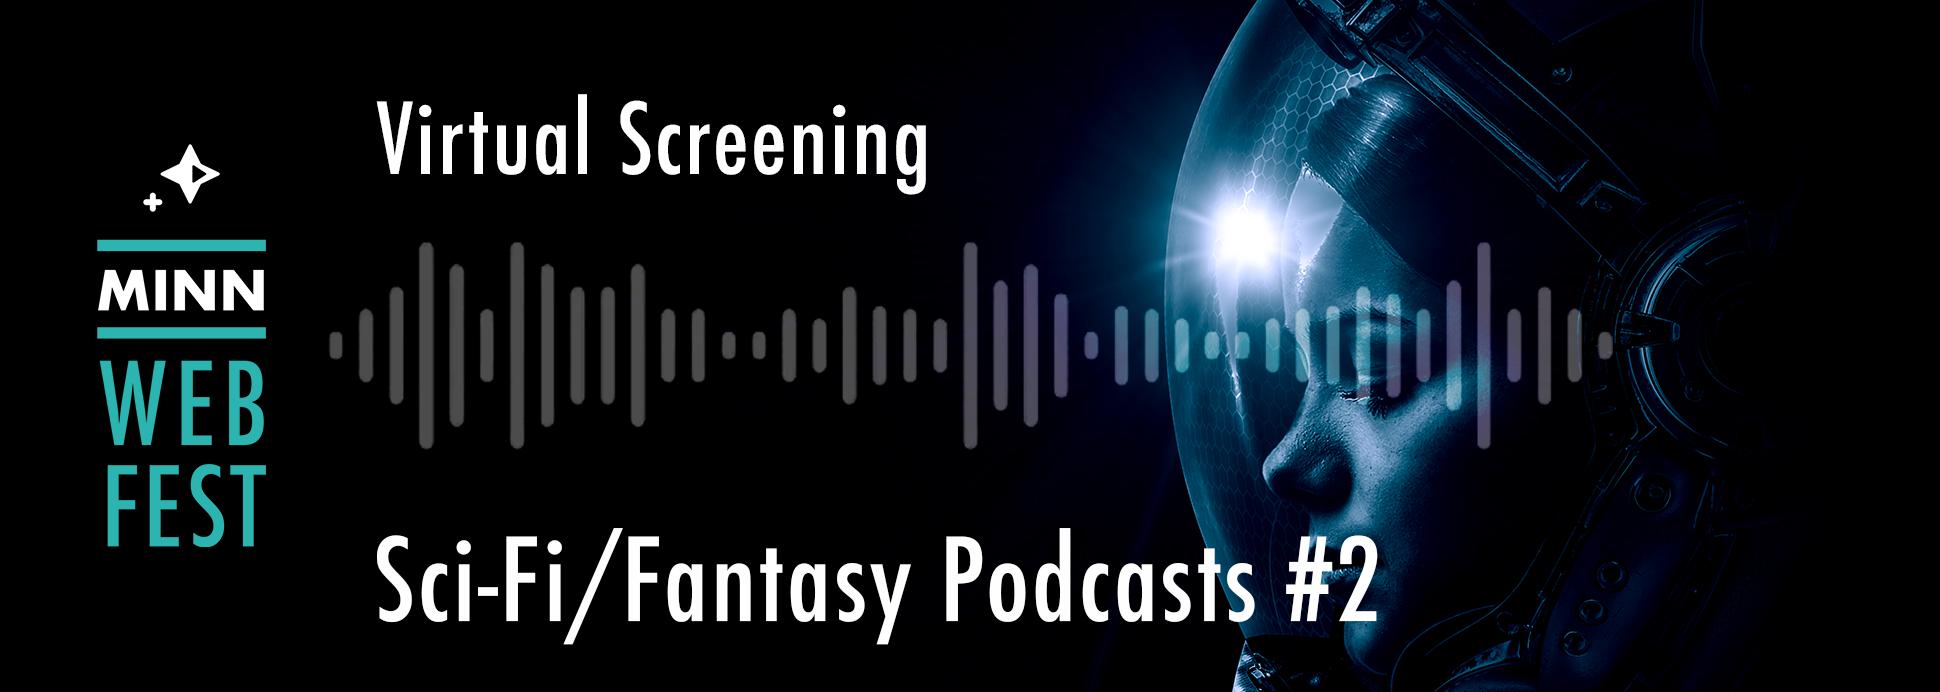 Sci-Fi/Fantasy Podcasts #2